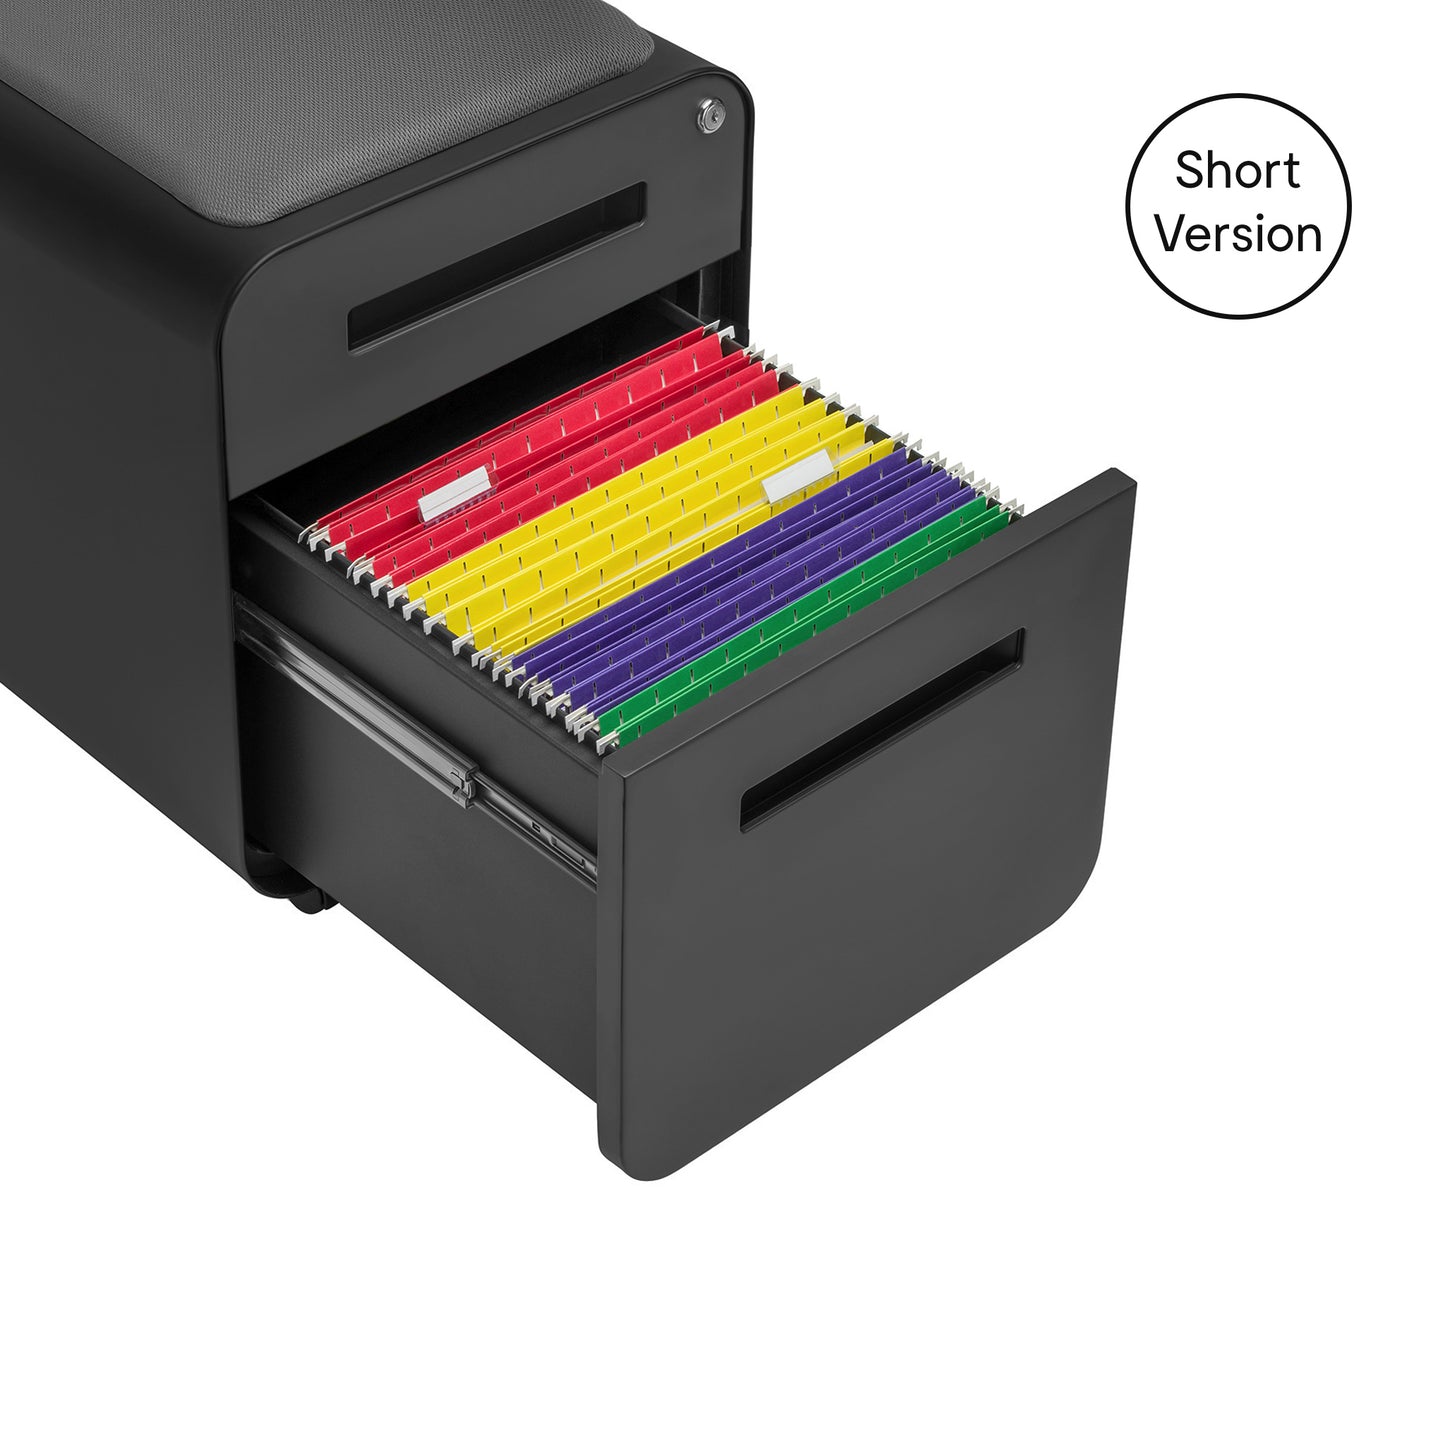 Stockpile Mini 2-Drawer File Cabinet (Black)